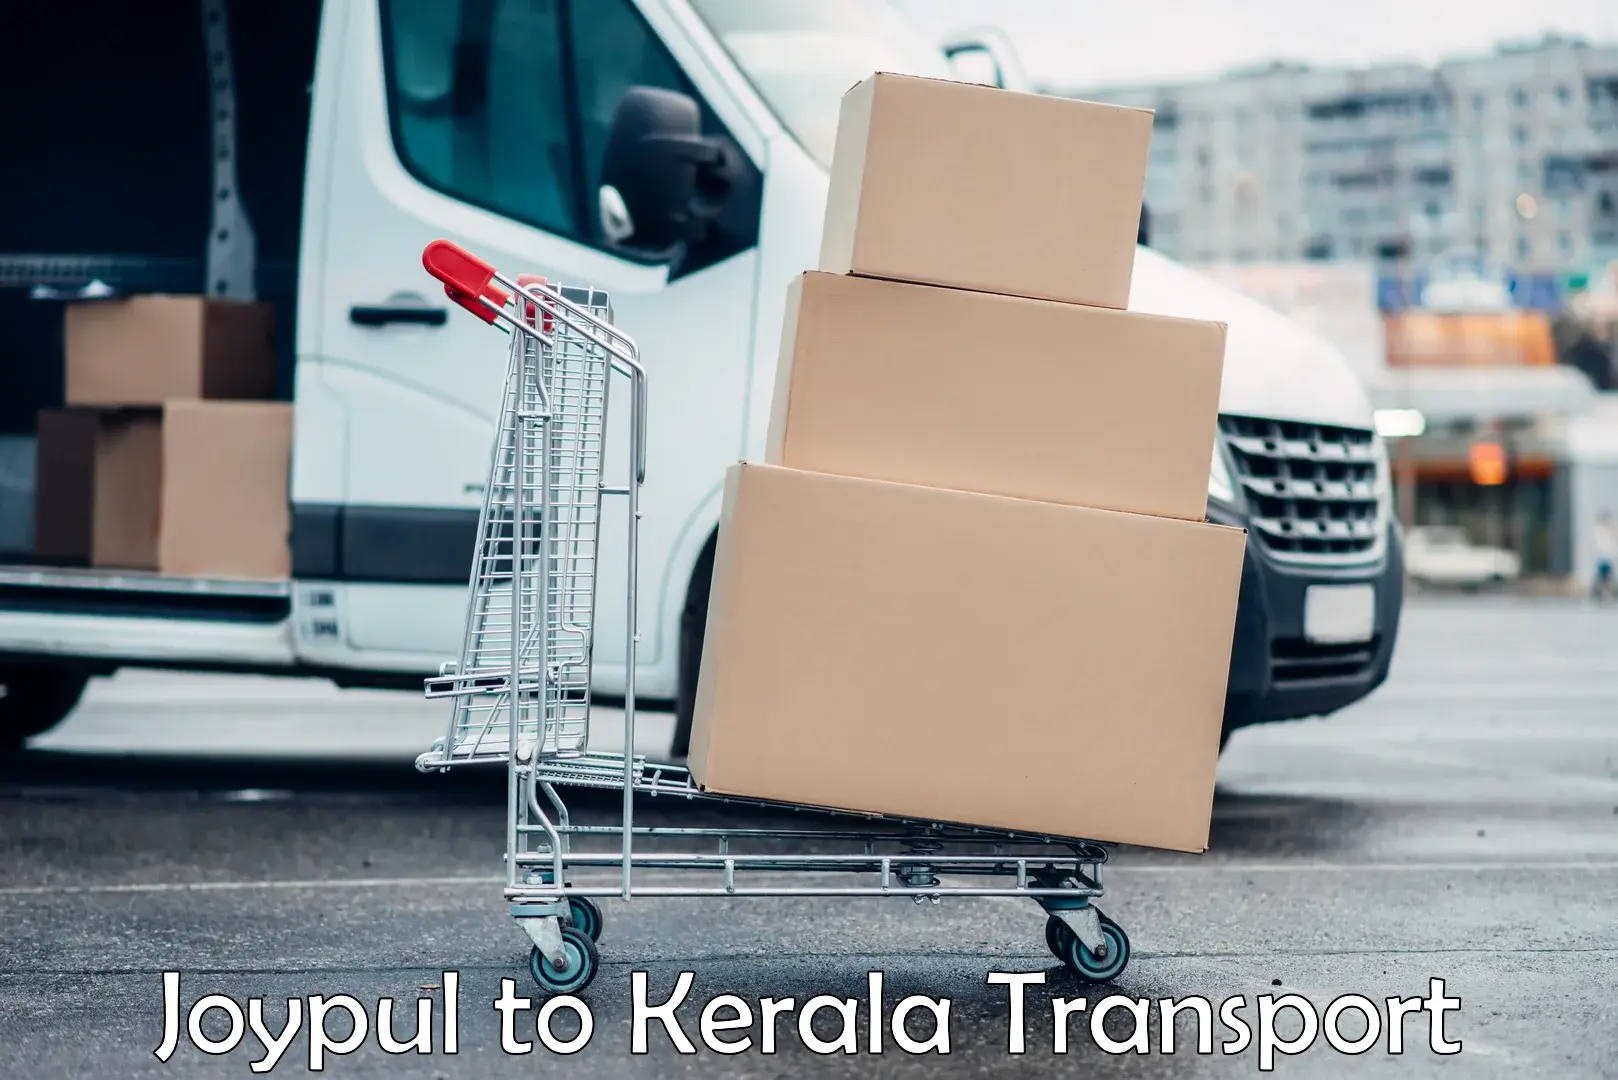 Online transport service Joypul to Kerala